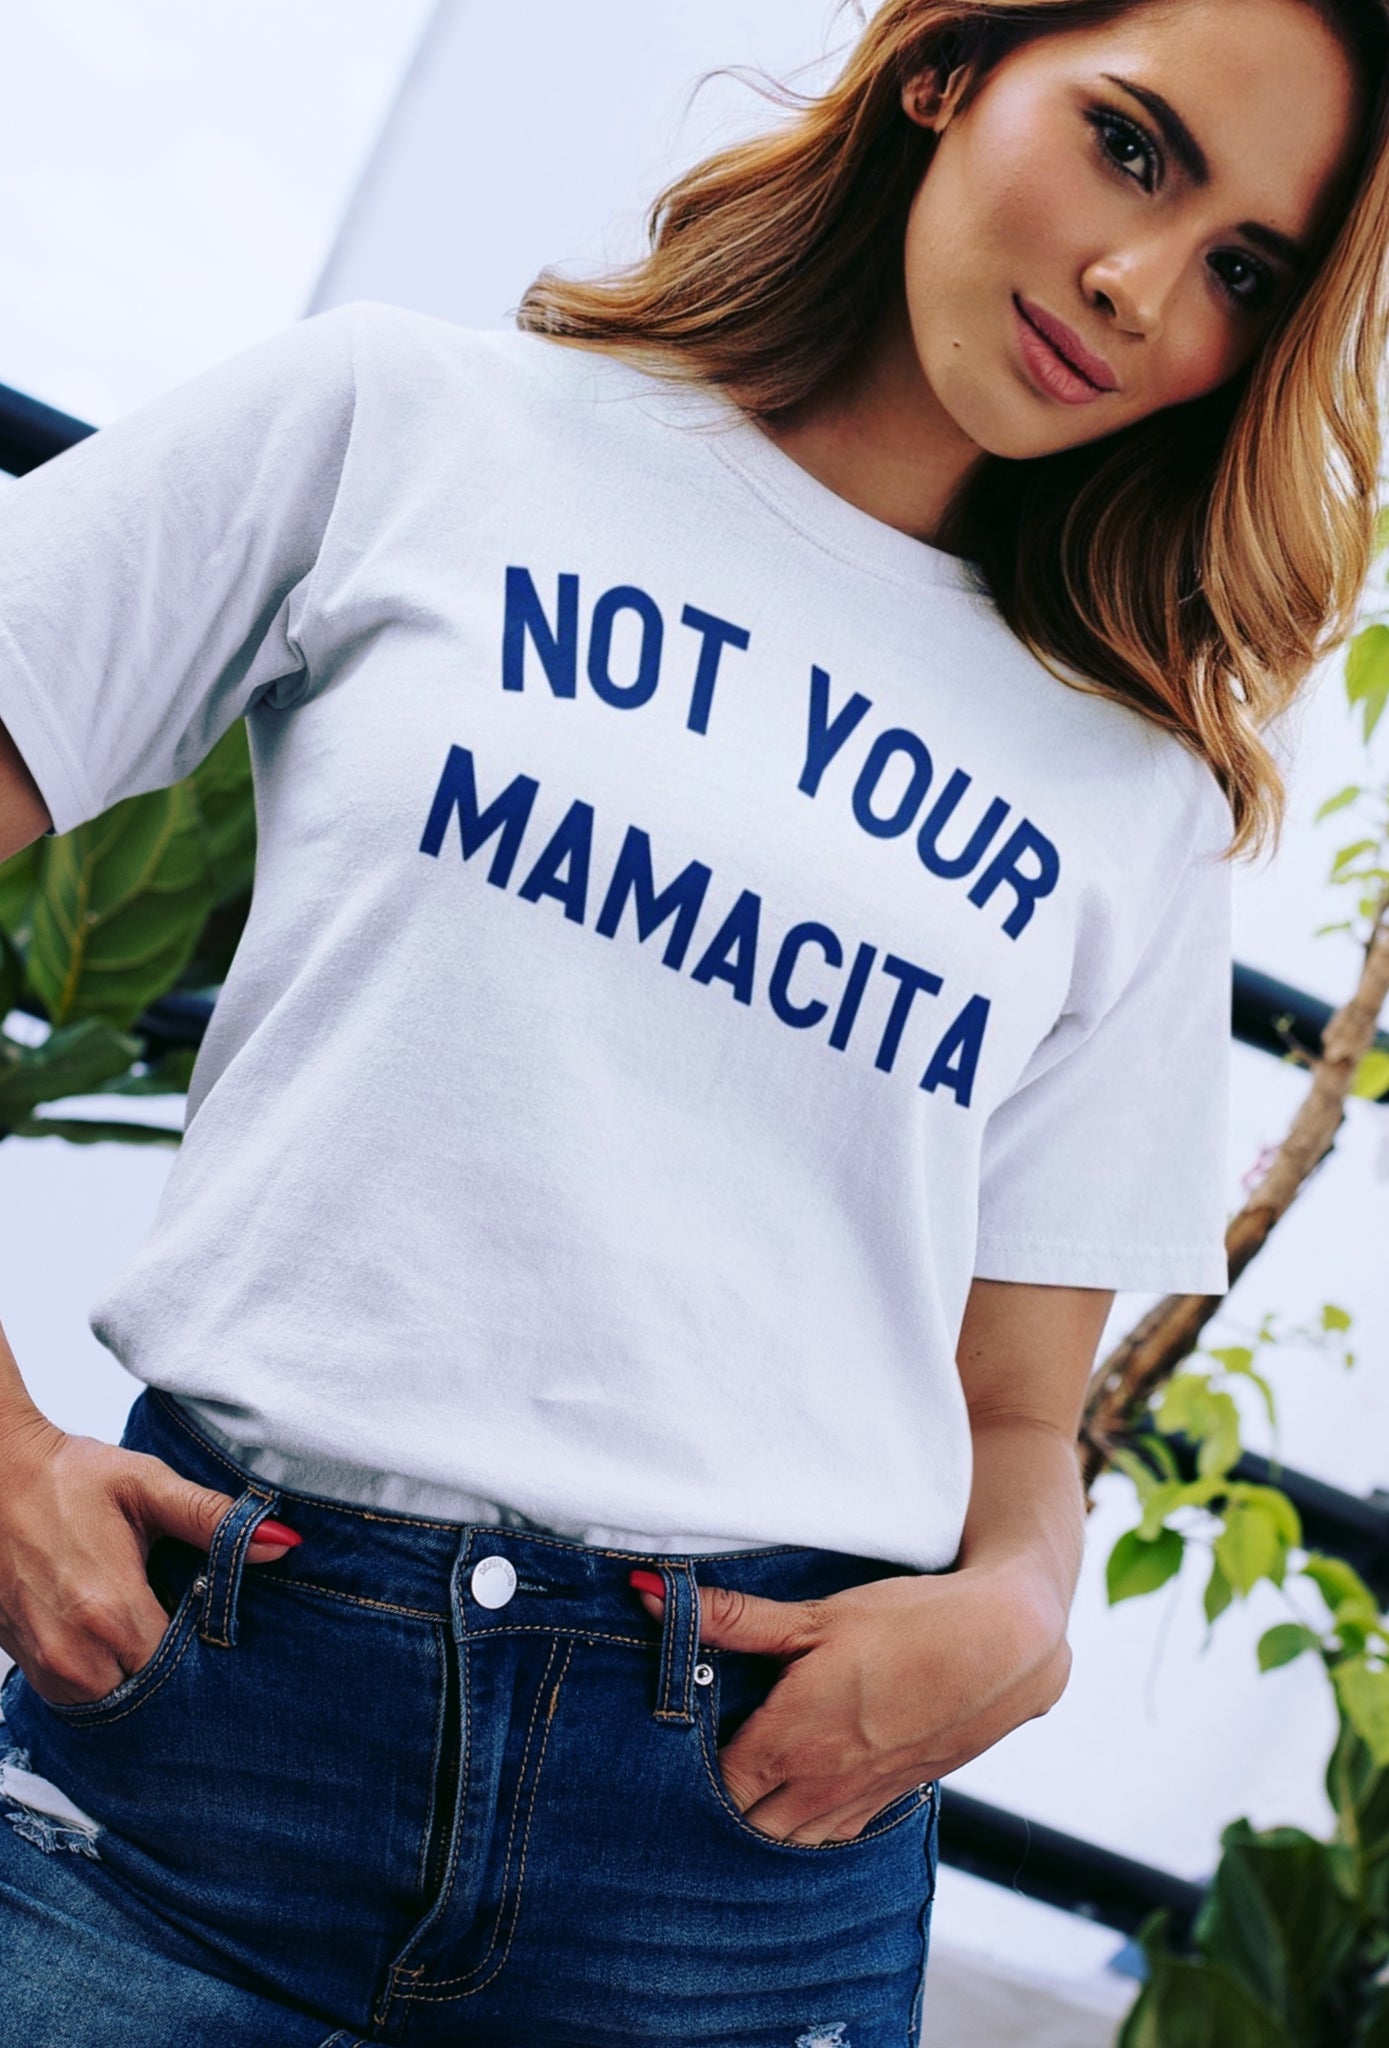 Not Your Mamacita Women's T-Shirt